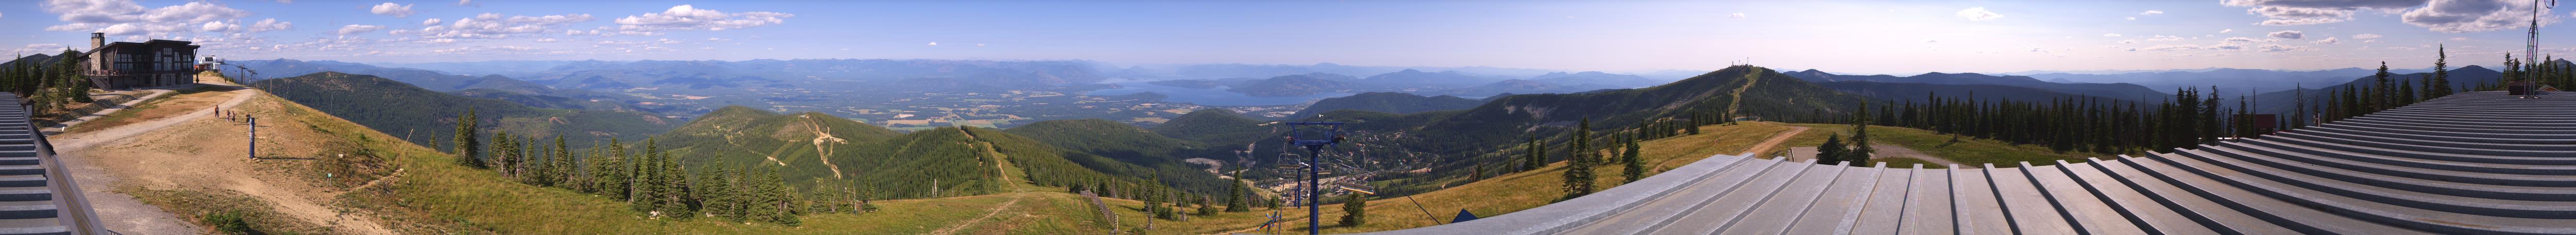 Webcam Schweitzer Mountain Resort: Panoramic